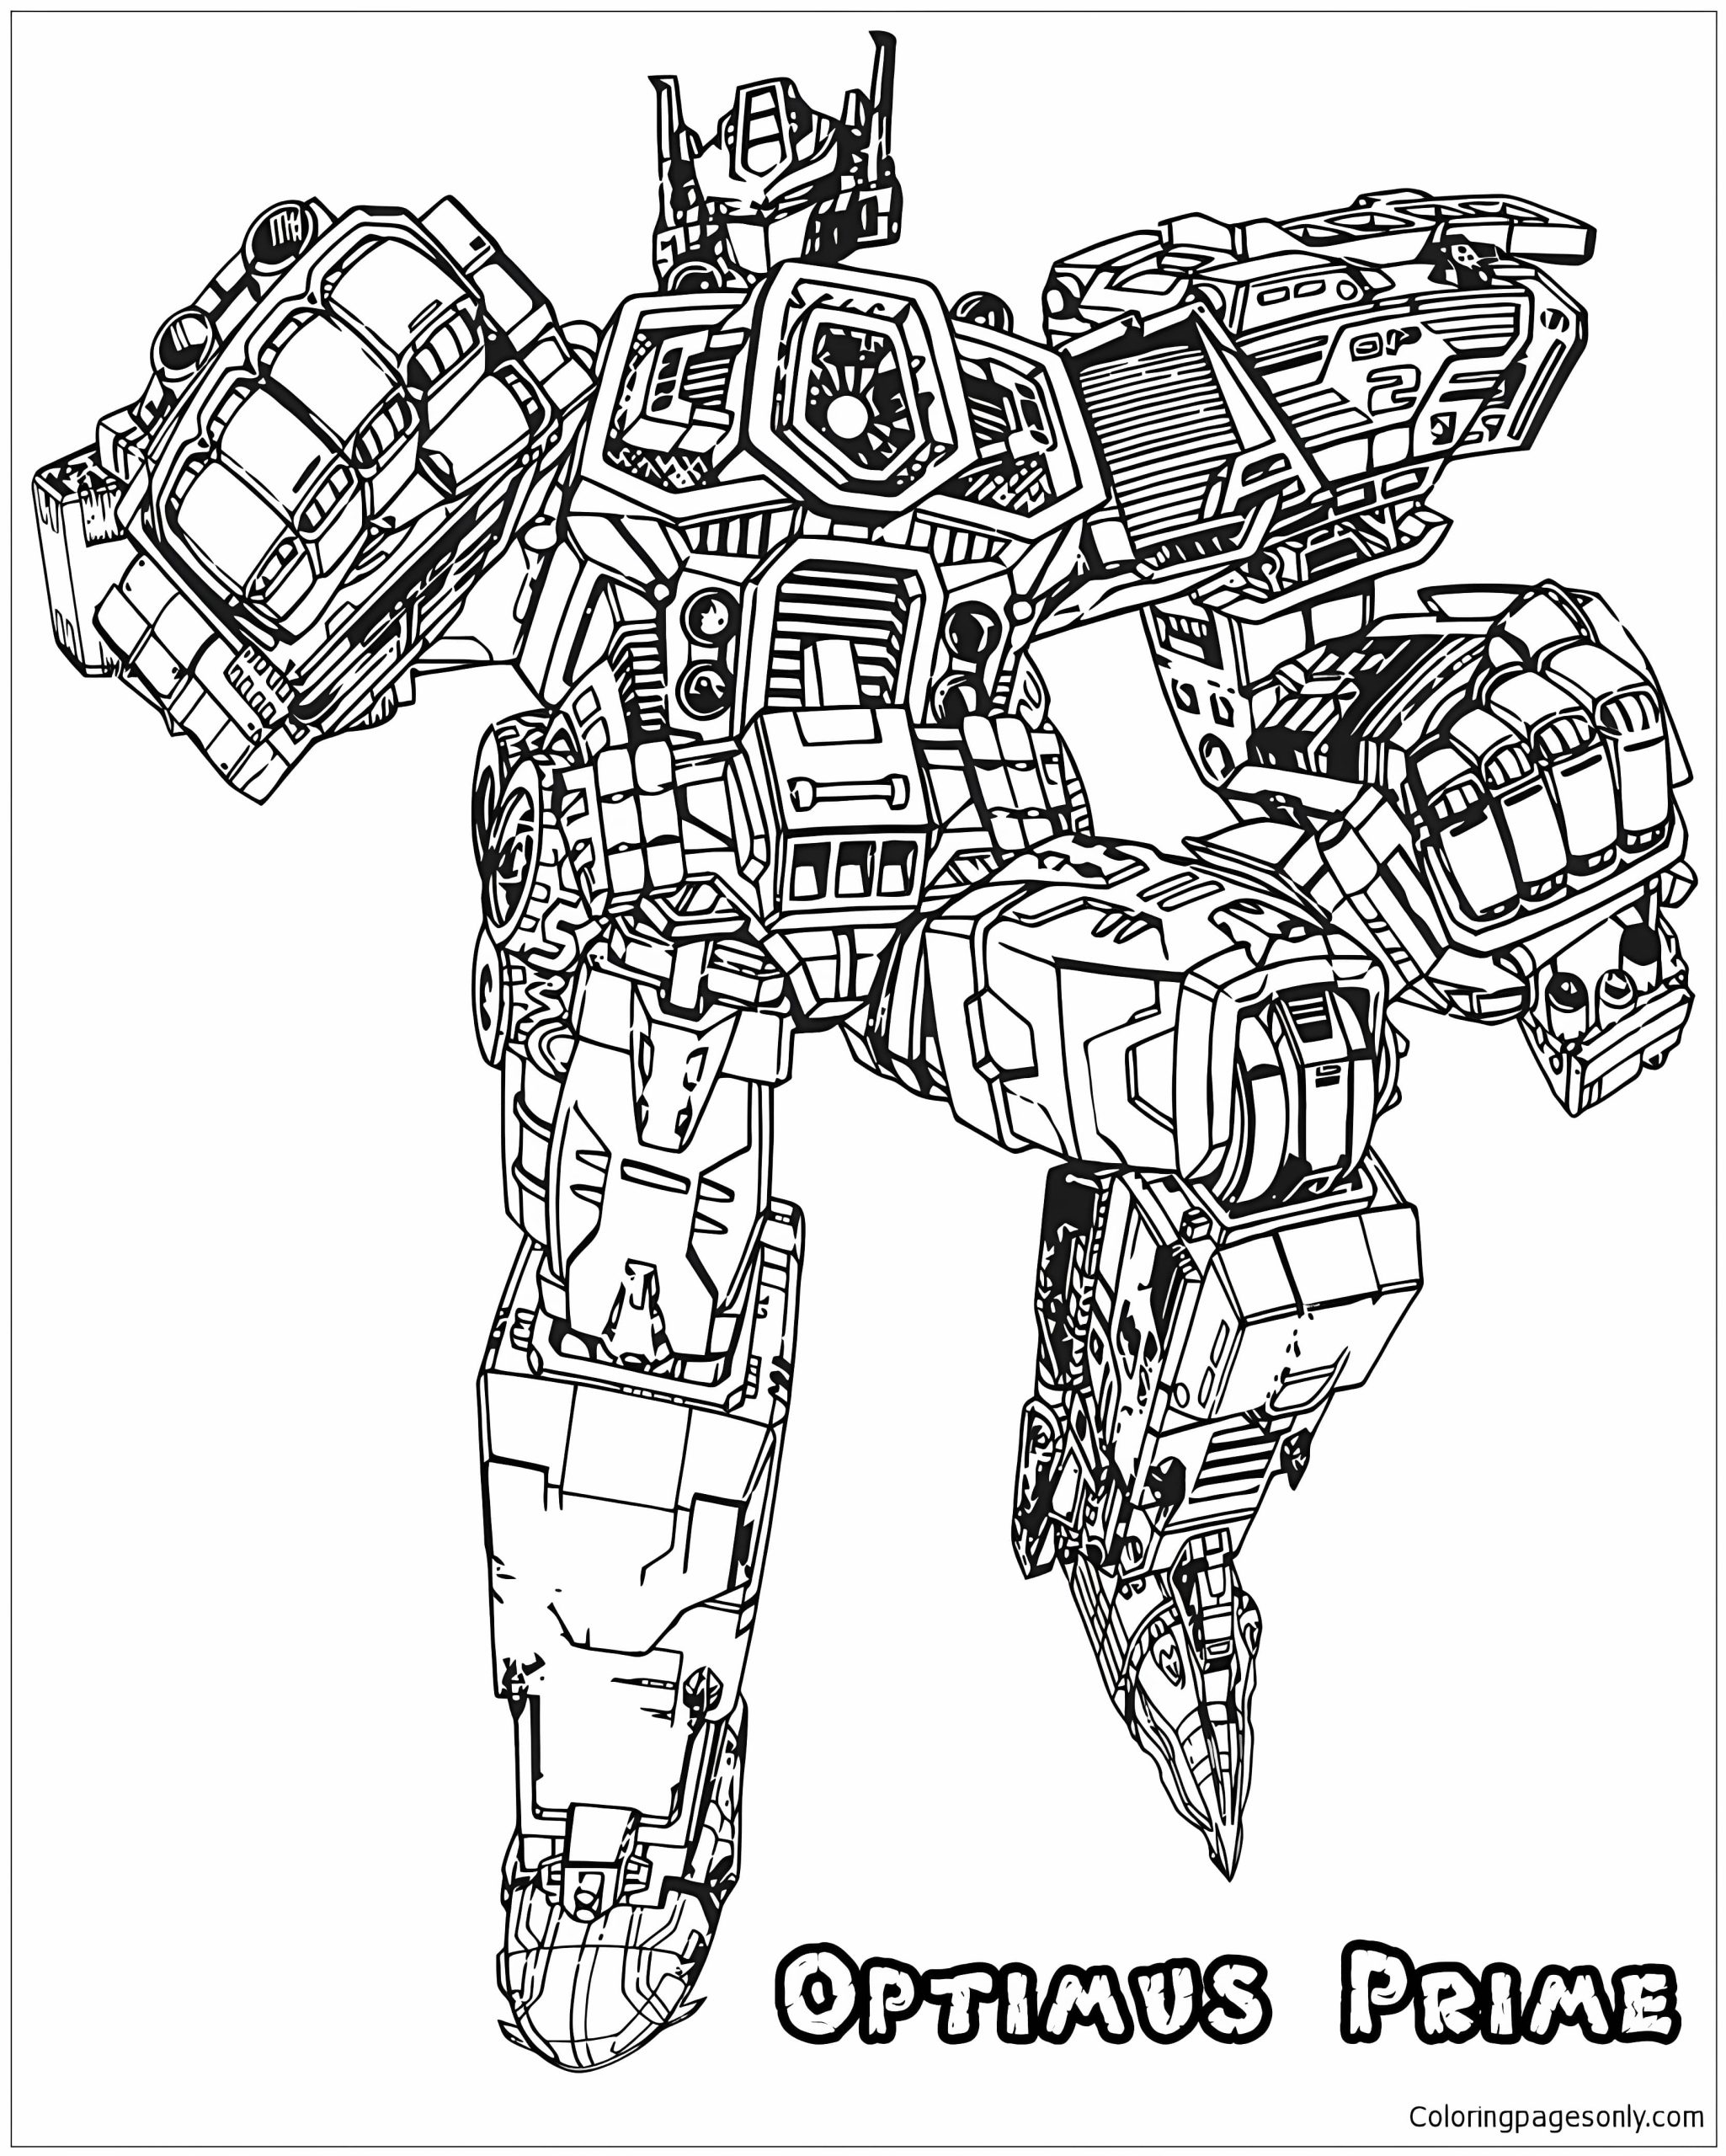 Optimus Prime – image 1 Coloring Page